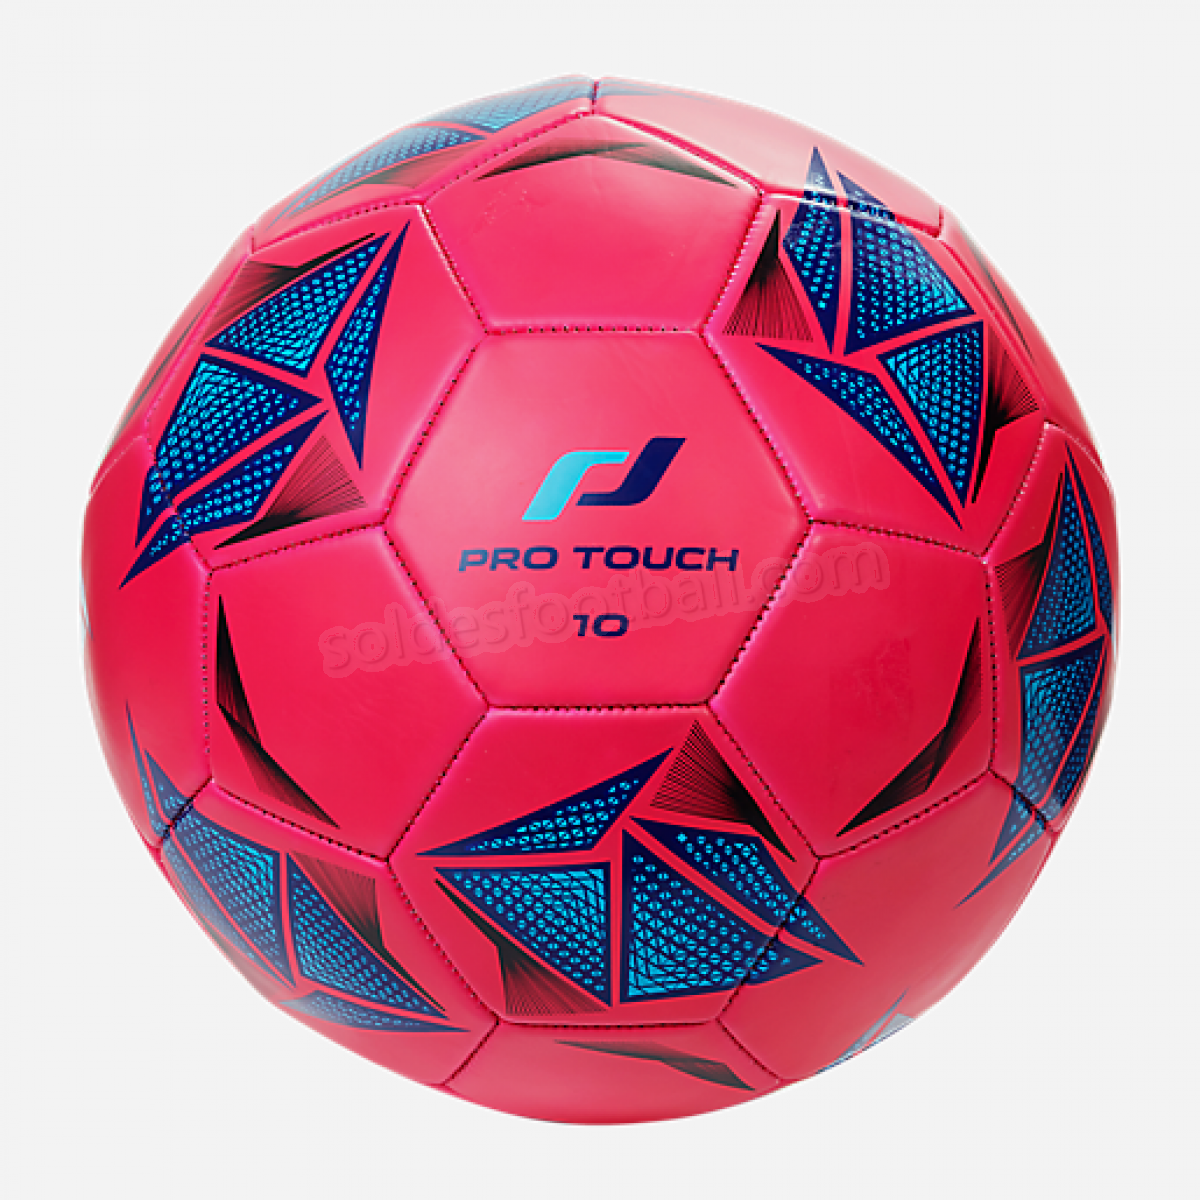 Ballon de football Force 10-PRO TOUCH en solde - Ballon de football Force 10-PRO TOUCH en solde